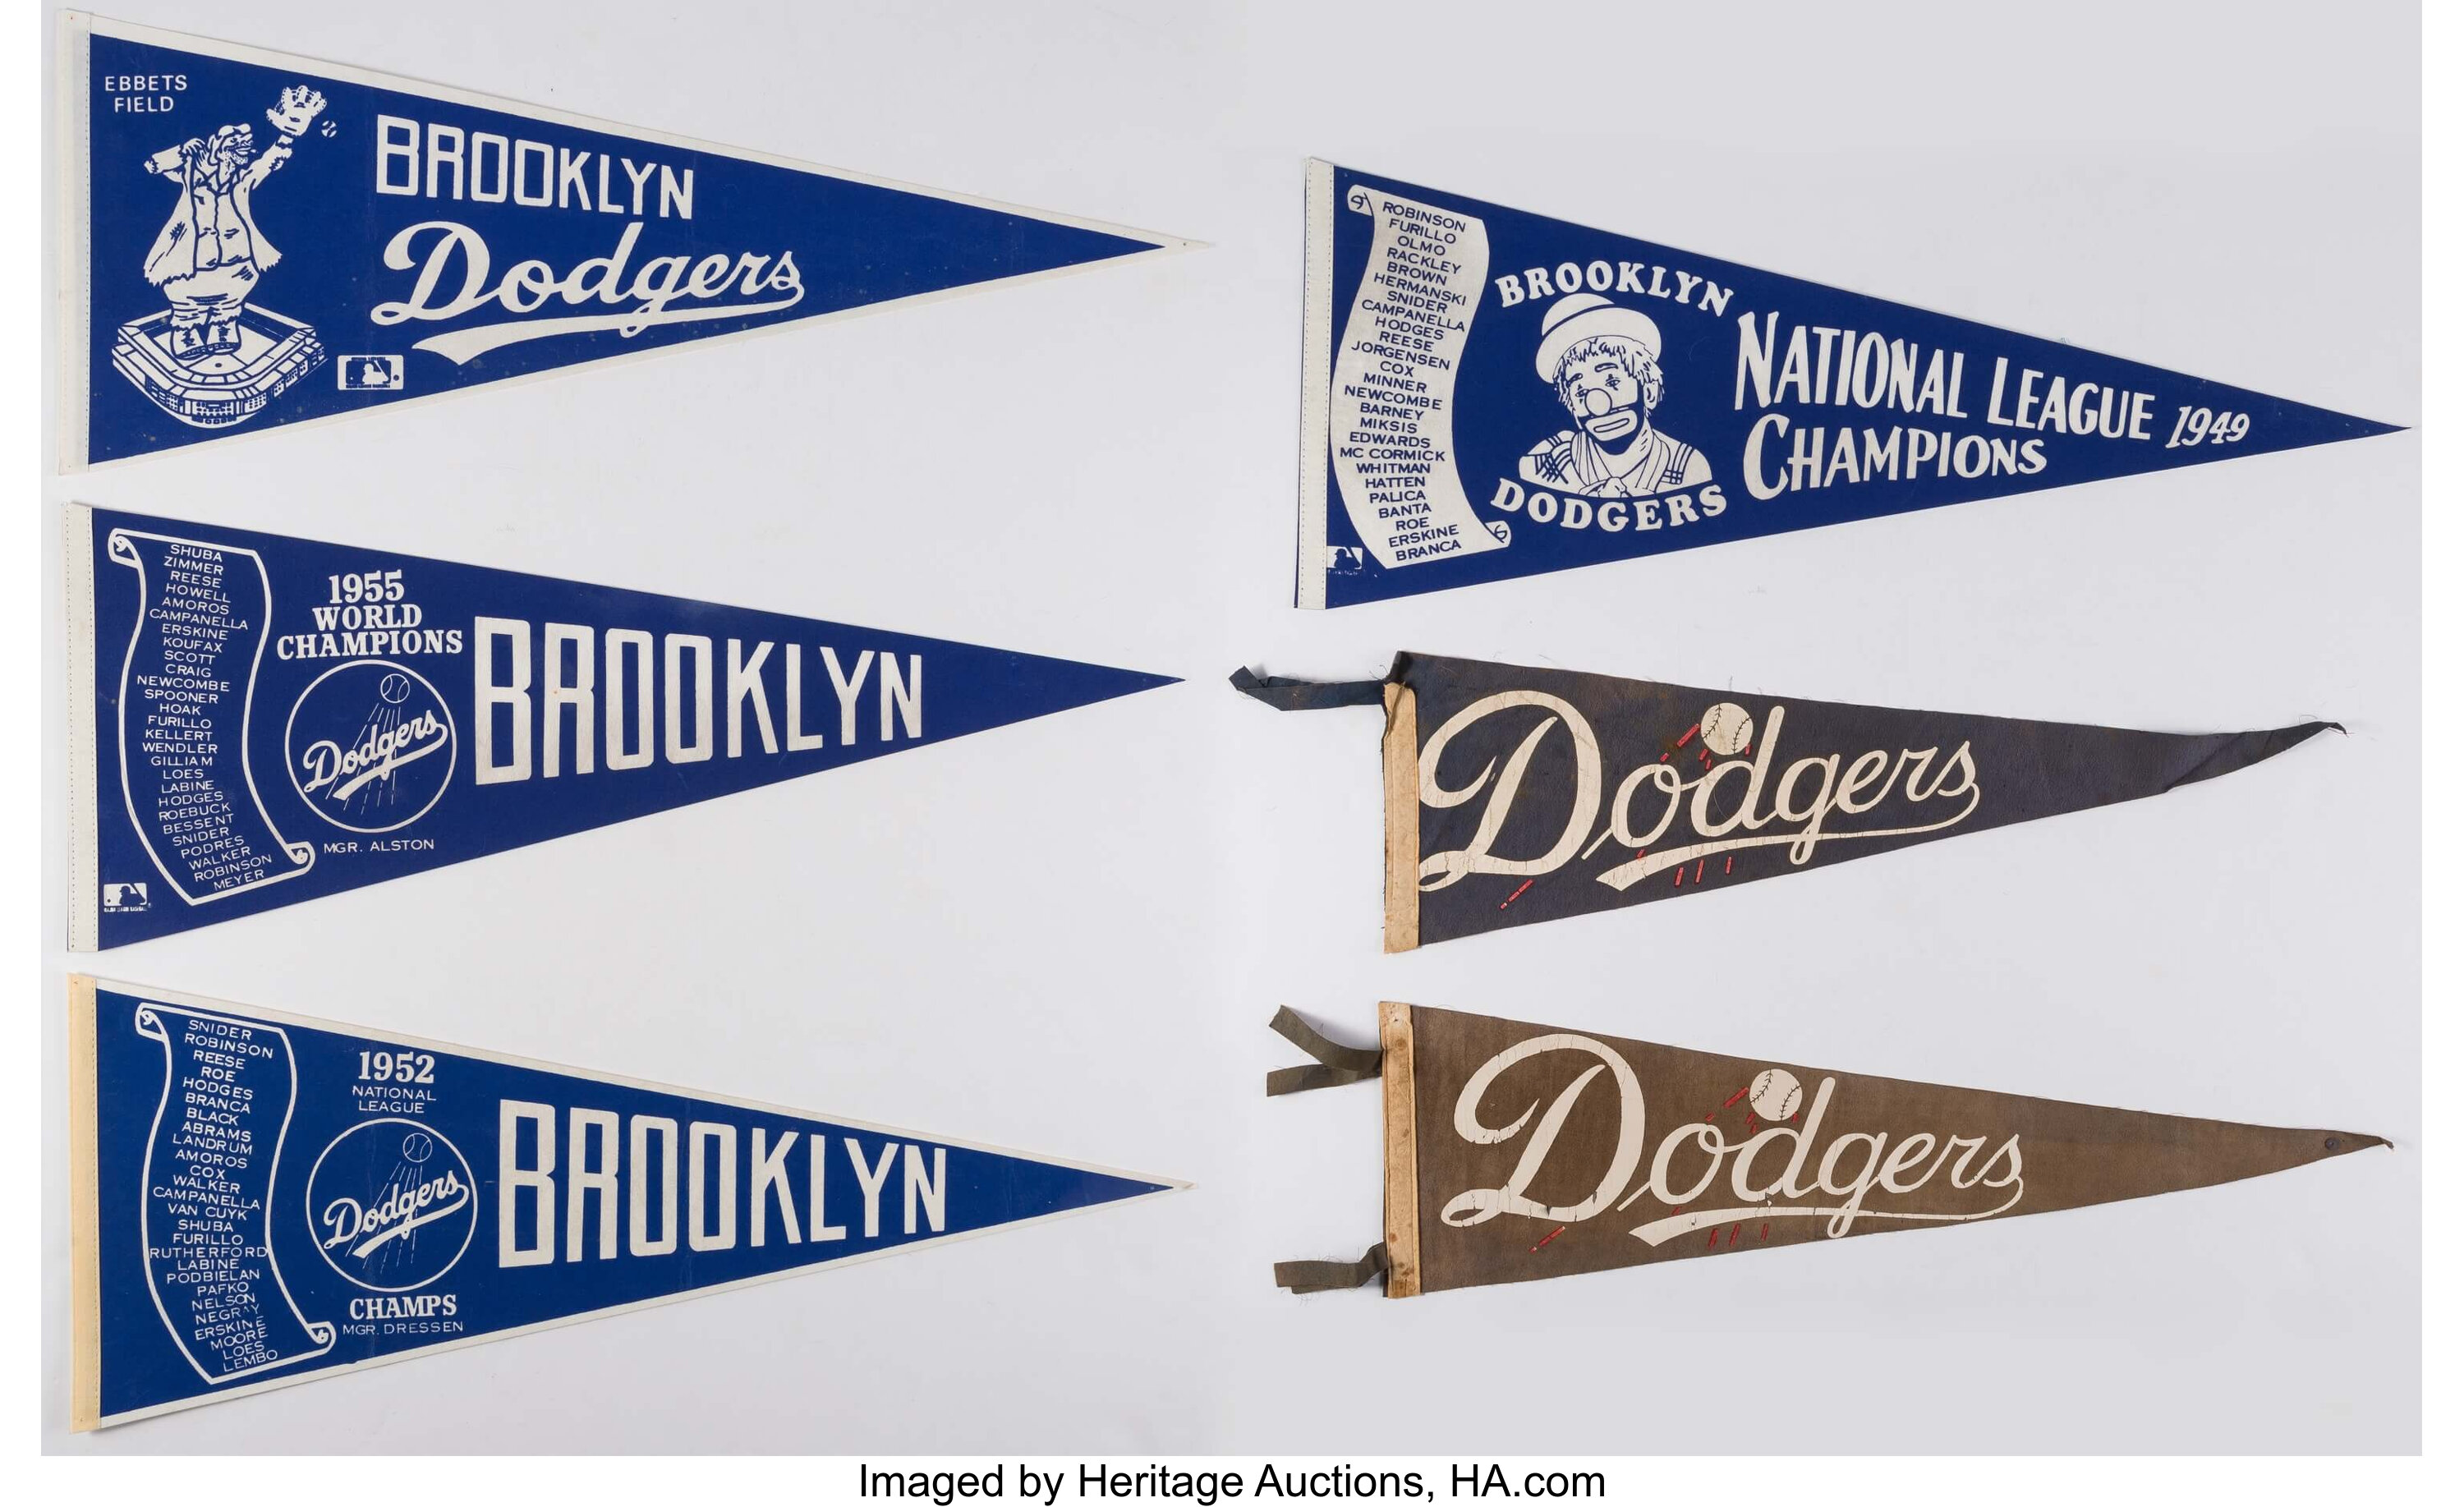 Brooklyn Dodgers Pennant Print